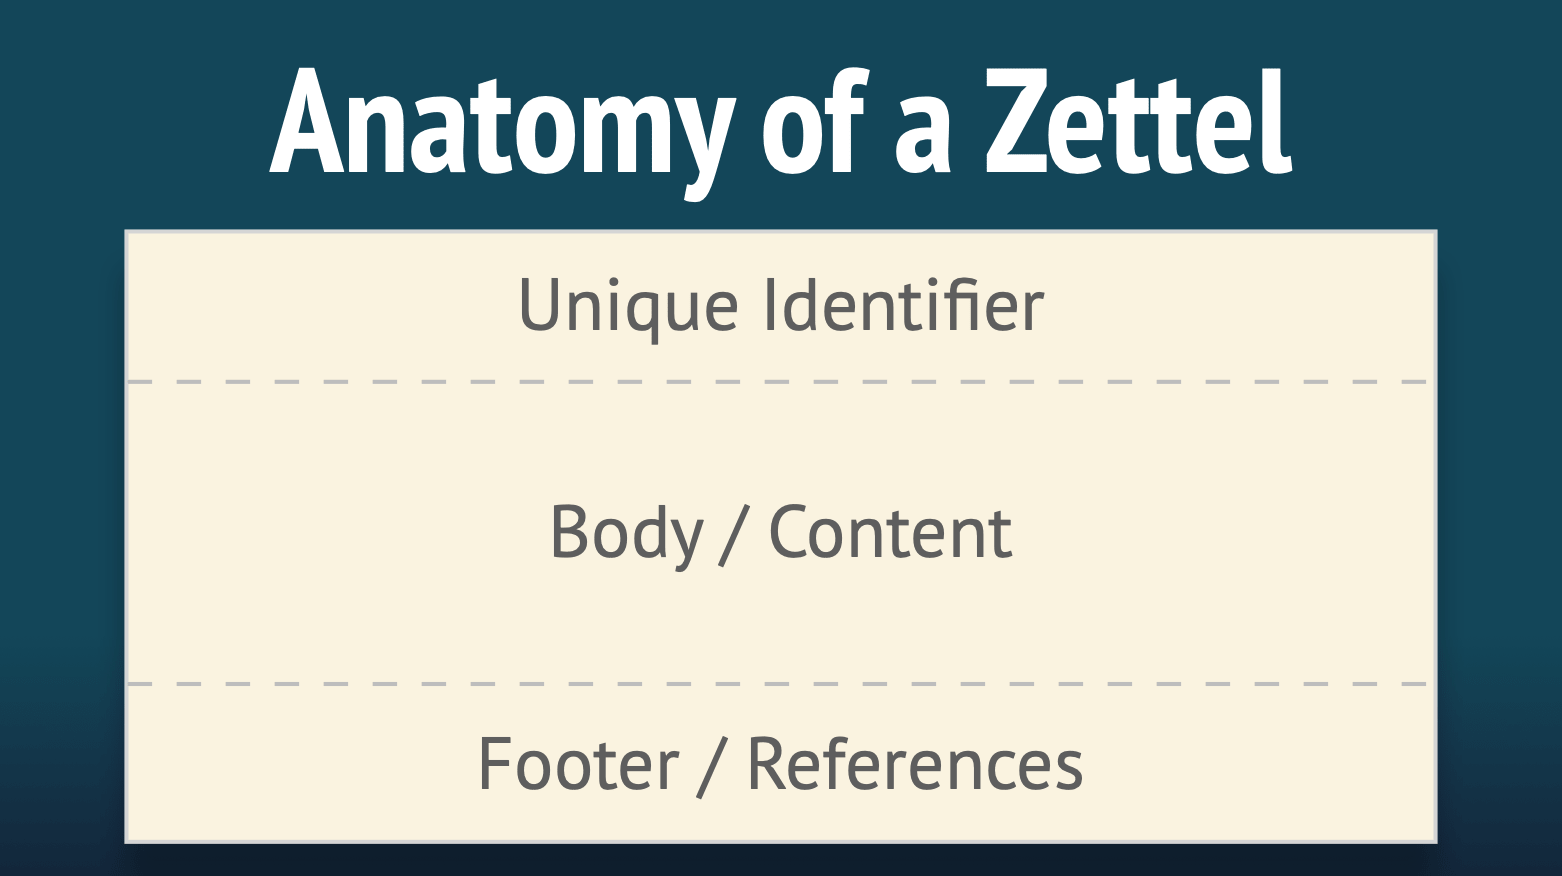 Anatomy of a Zettel